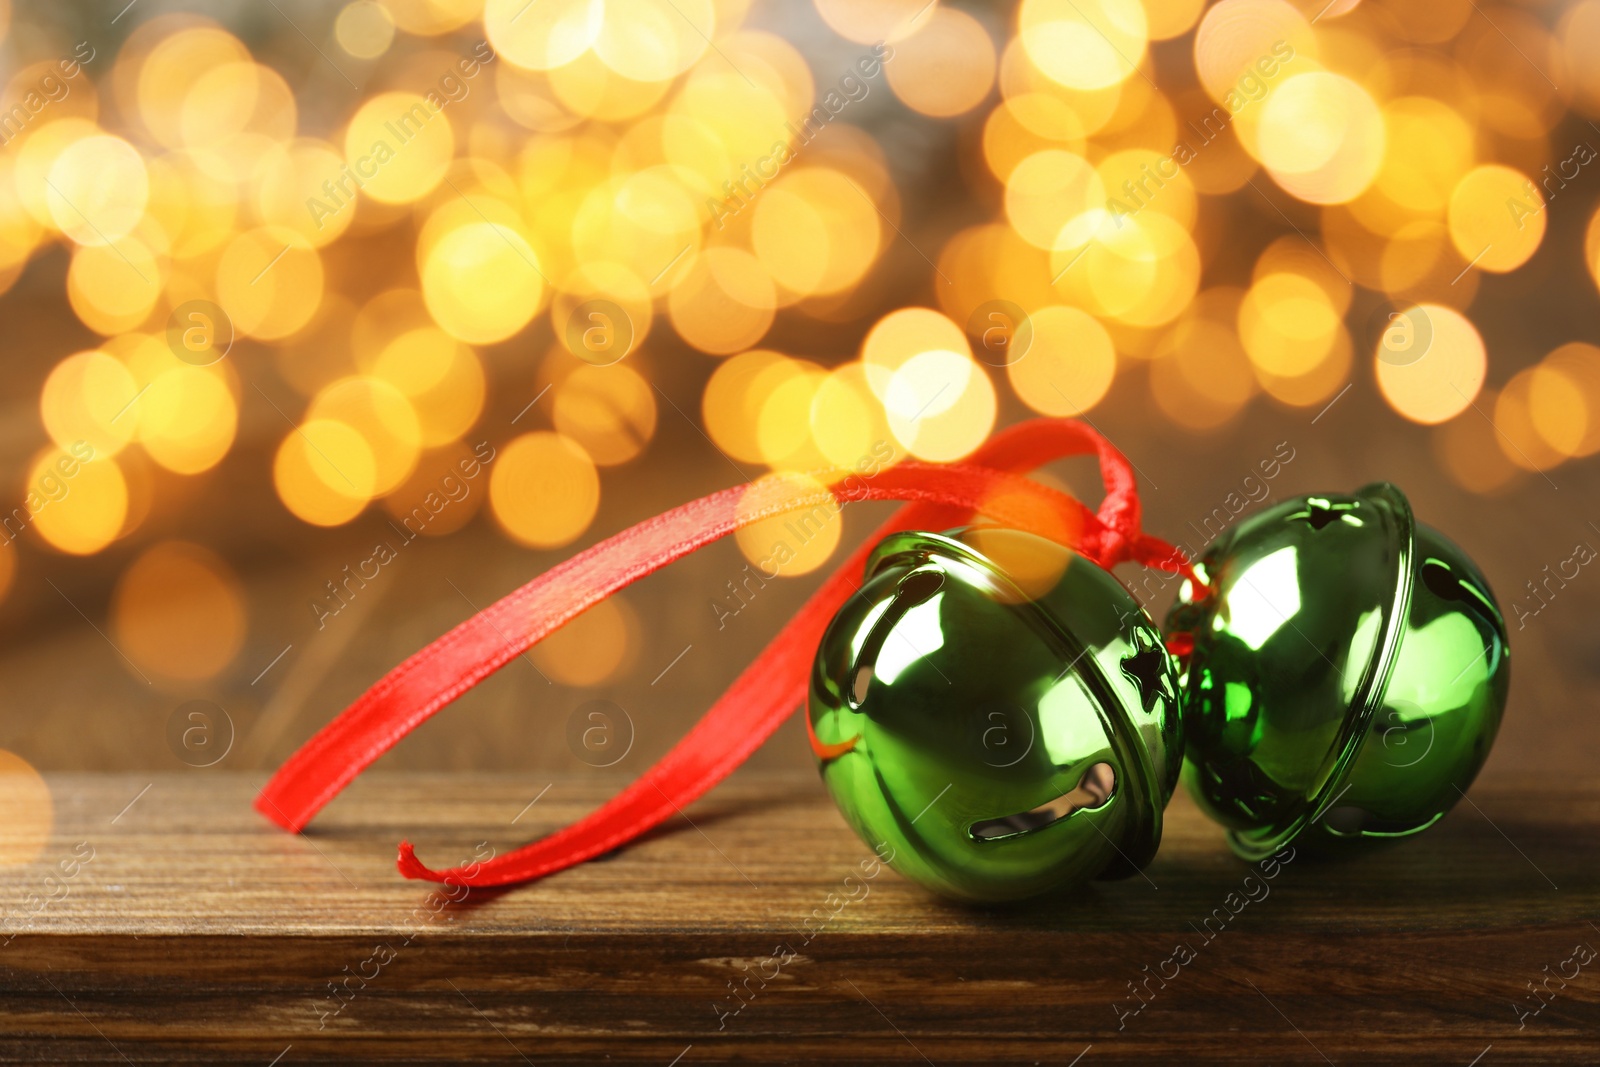 Image of Christmas music. Jingle bells on wooden table, bokeh effect